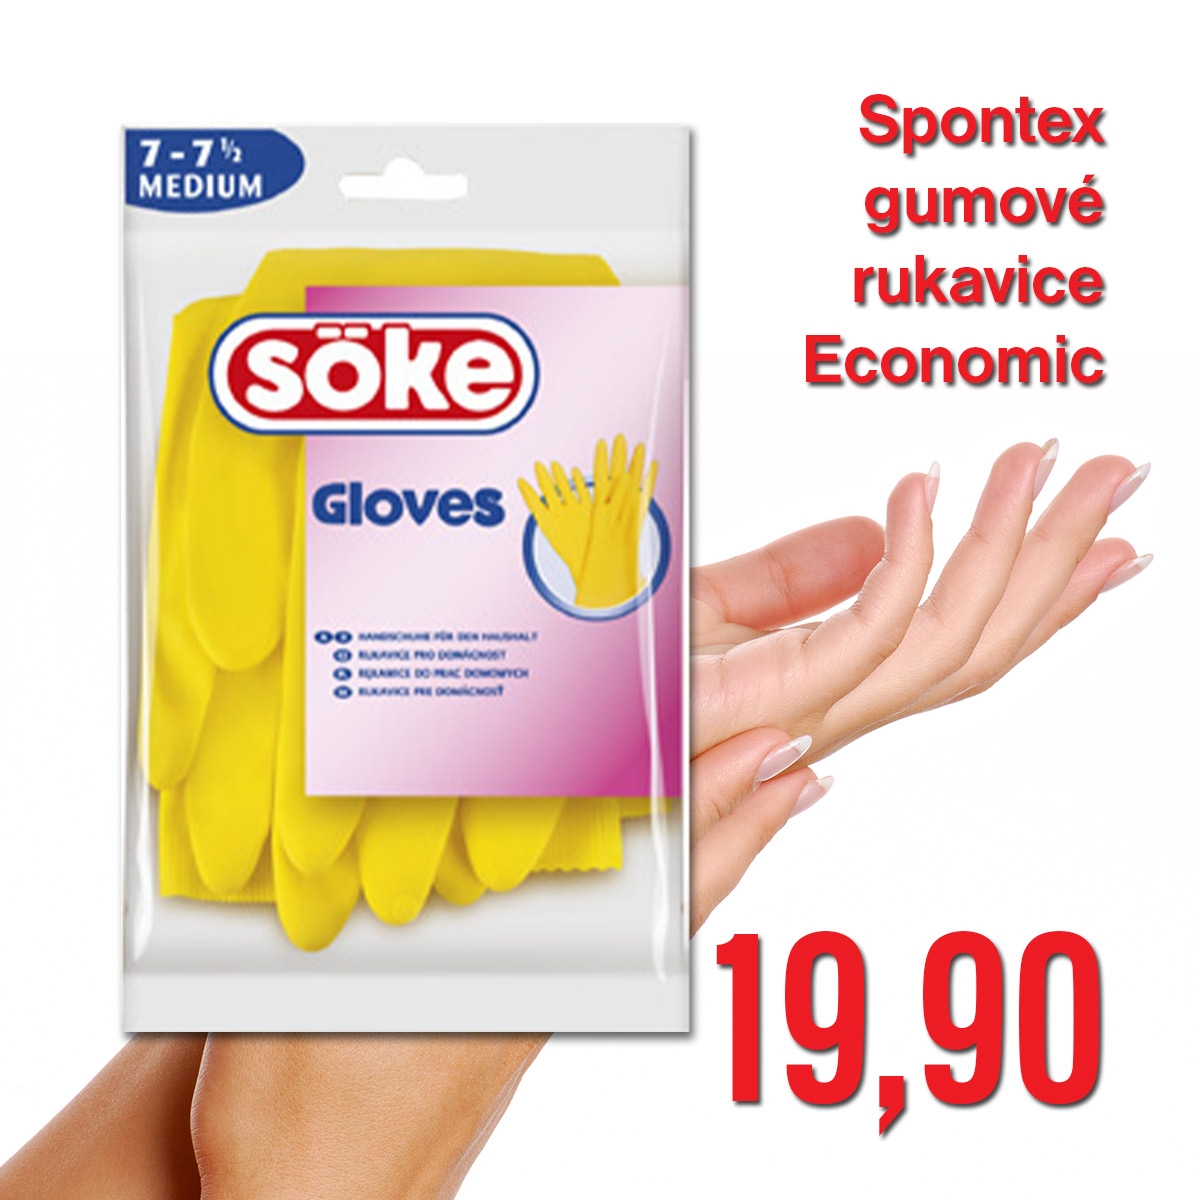 Spontex gumové rukavice Economic